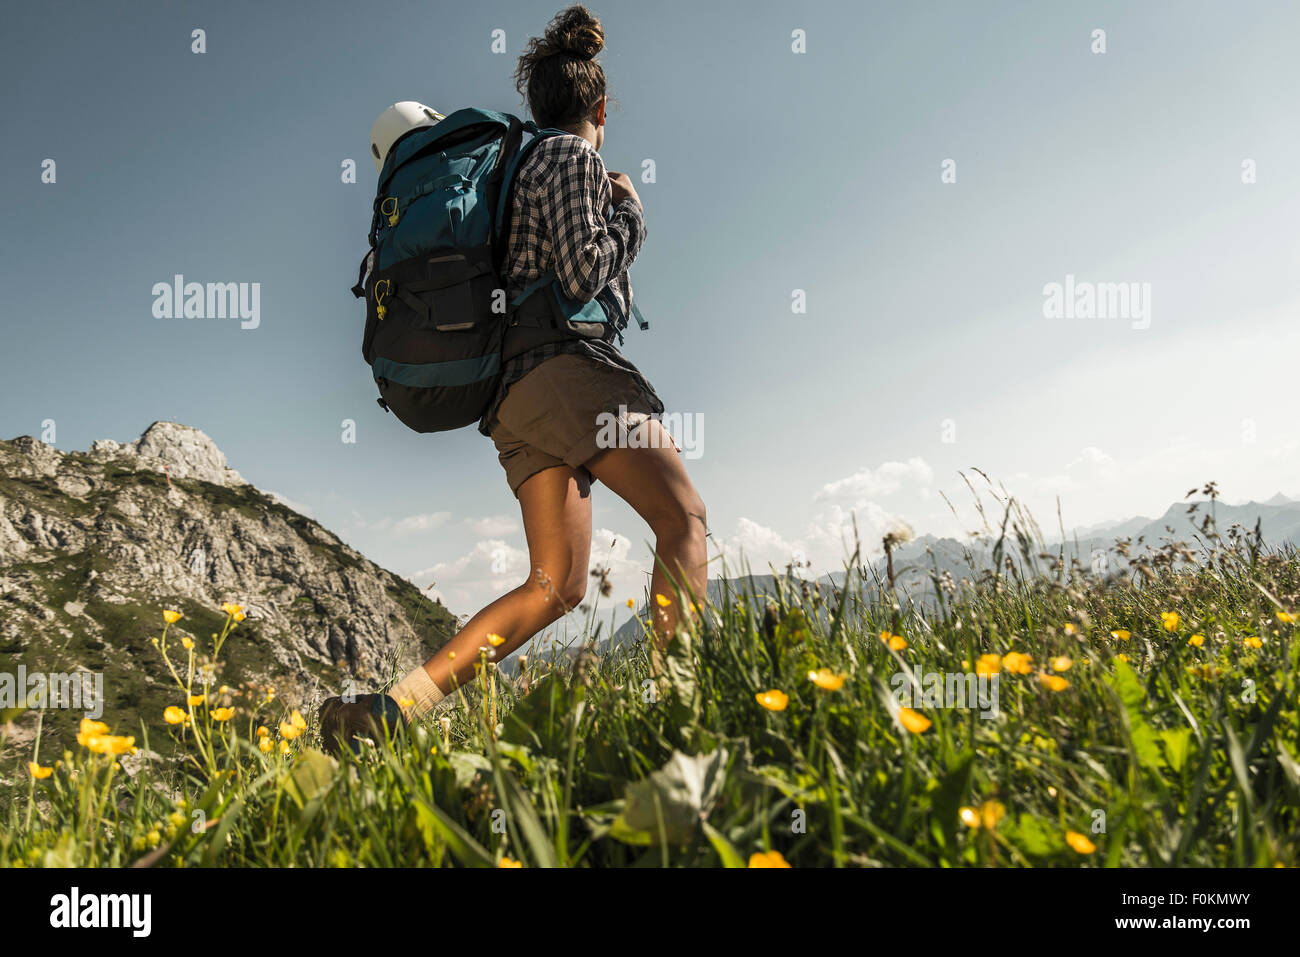 Austria, Tyrol, Tannheimer Tal, young woman hiking on alpine meadow Stock Photo